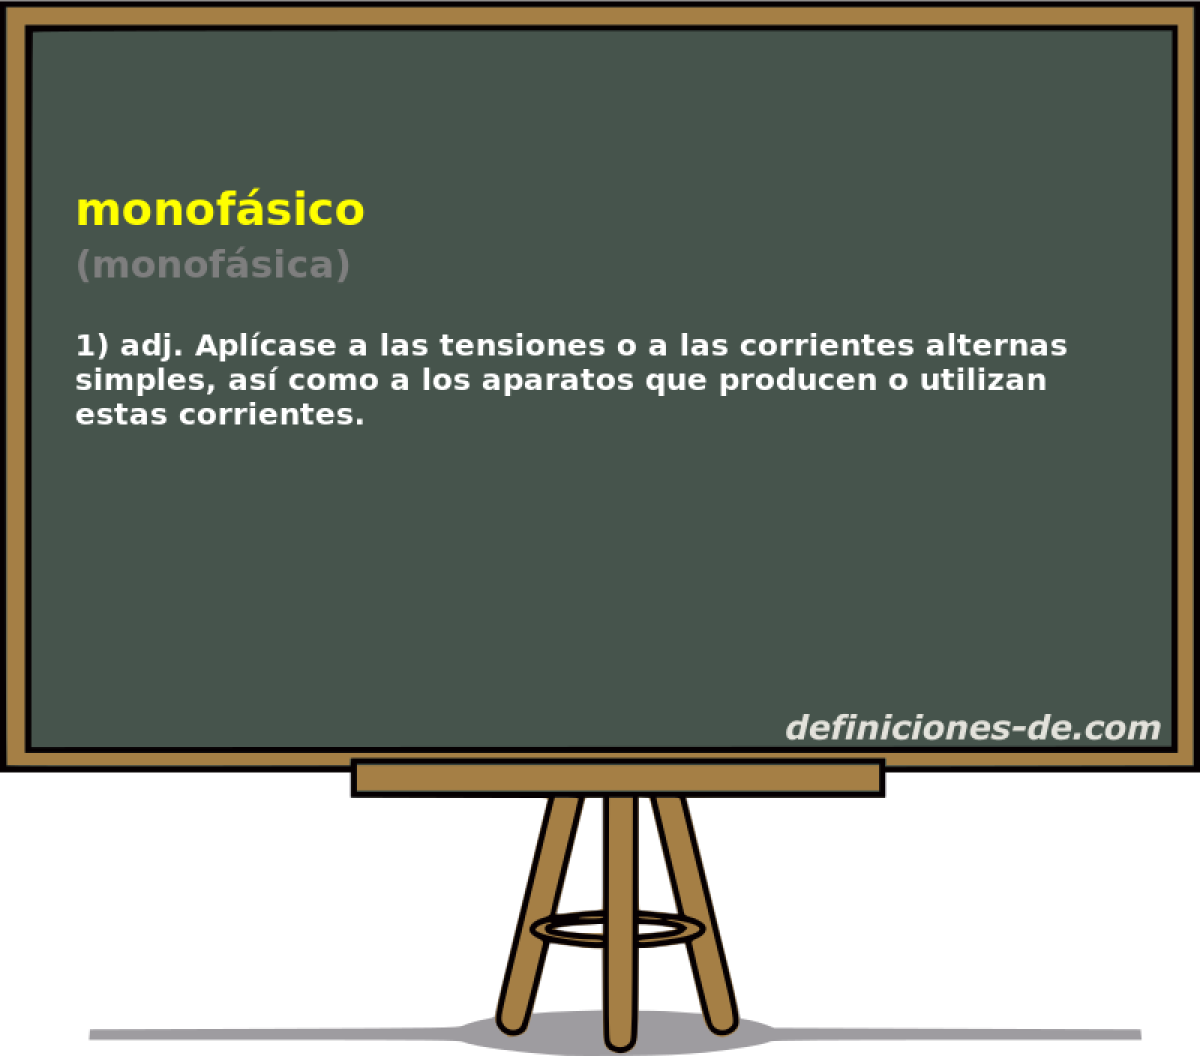 monofsico (monofsica)